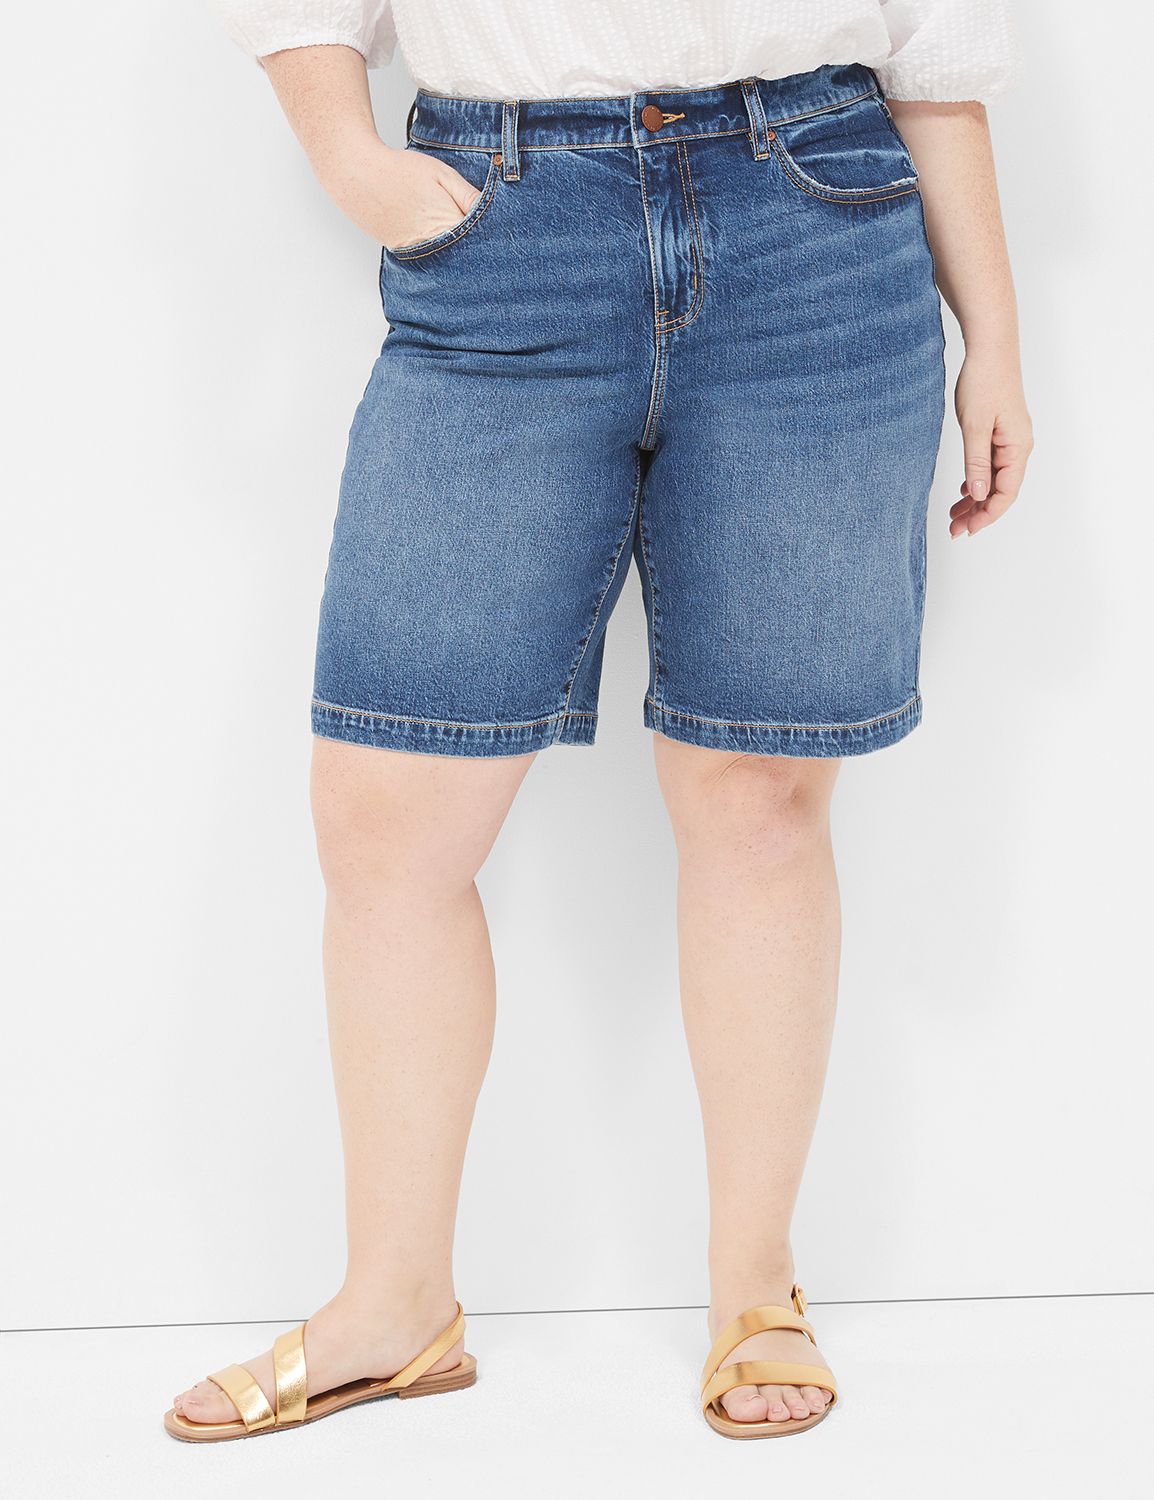 16 Jeans Summer Cotton Shorts Women Casual Large Size Short Pants Loose  Slim shorts @ Best Price Online